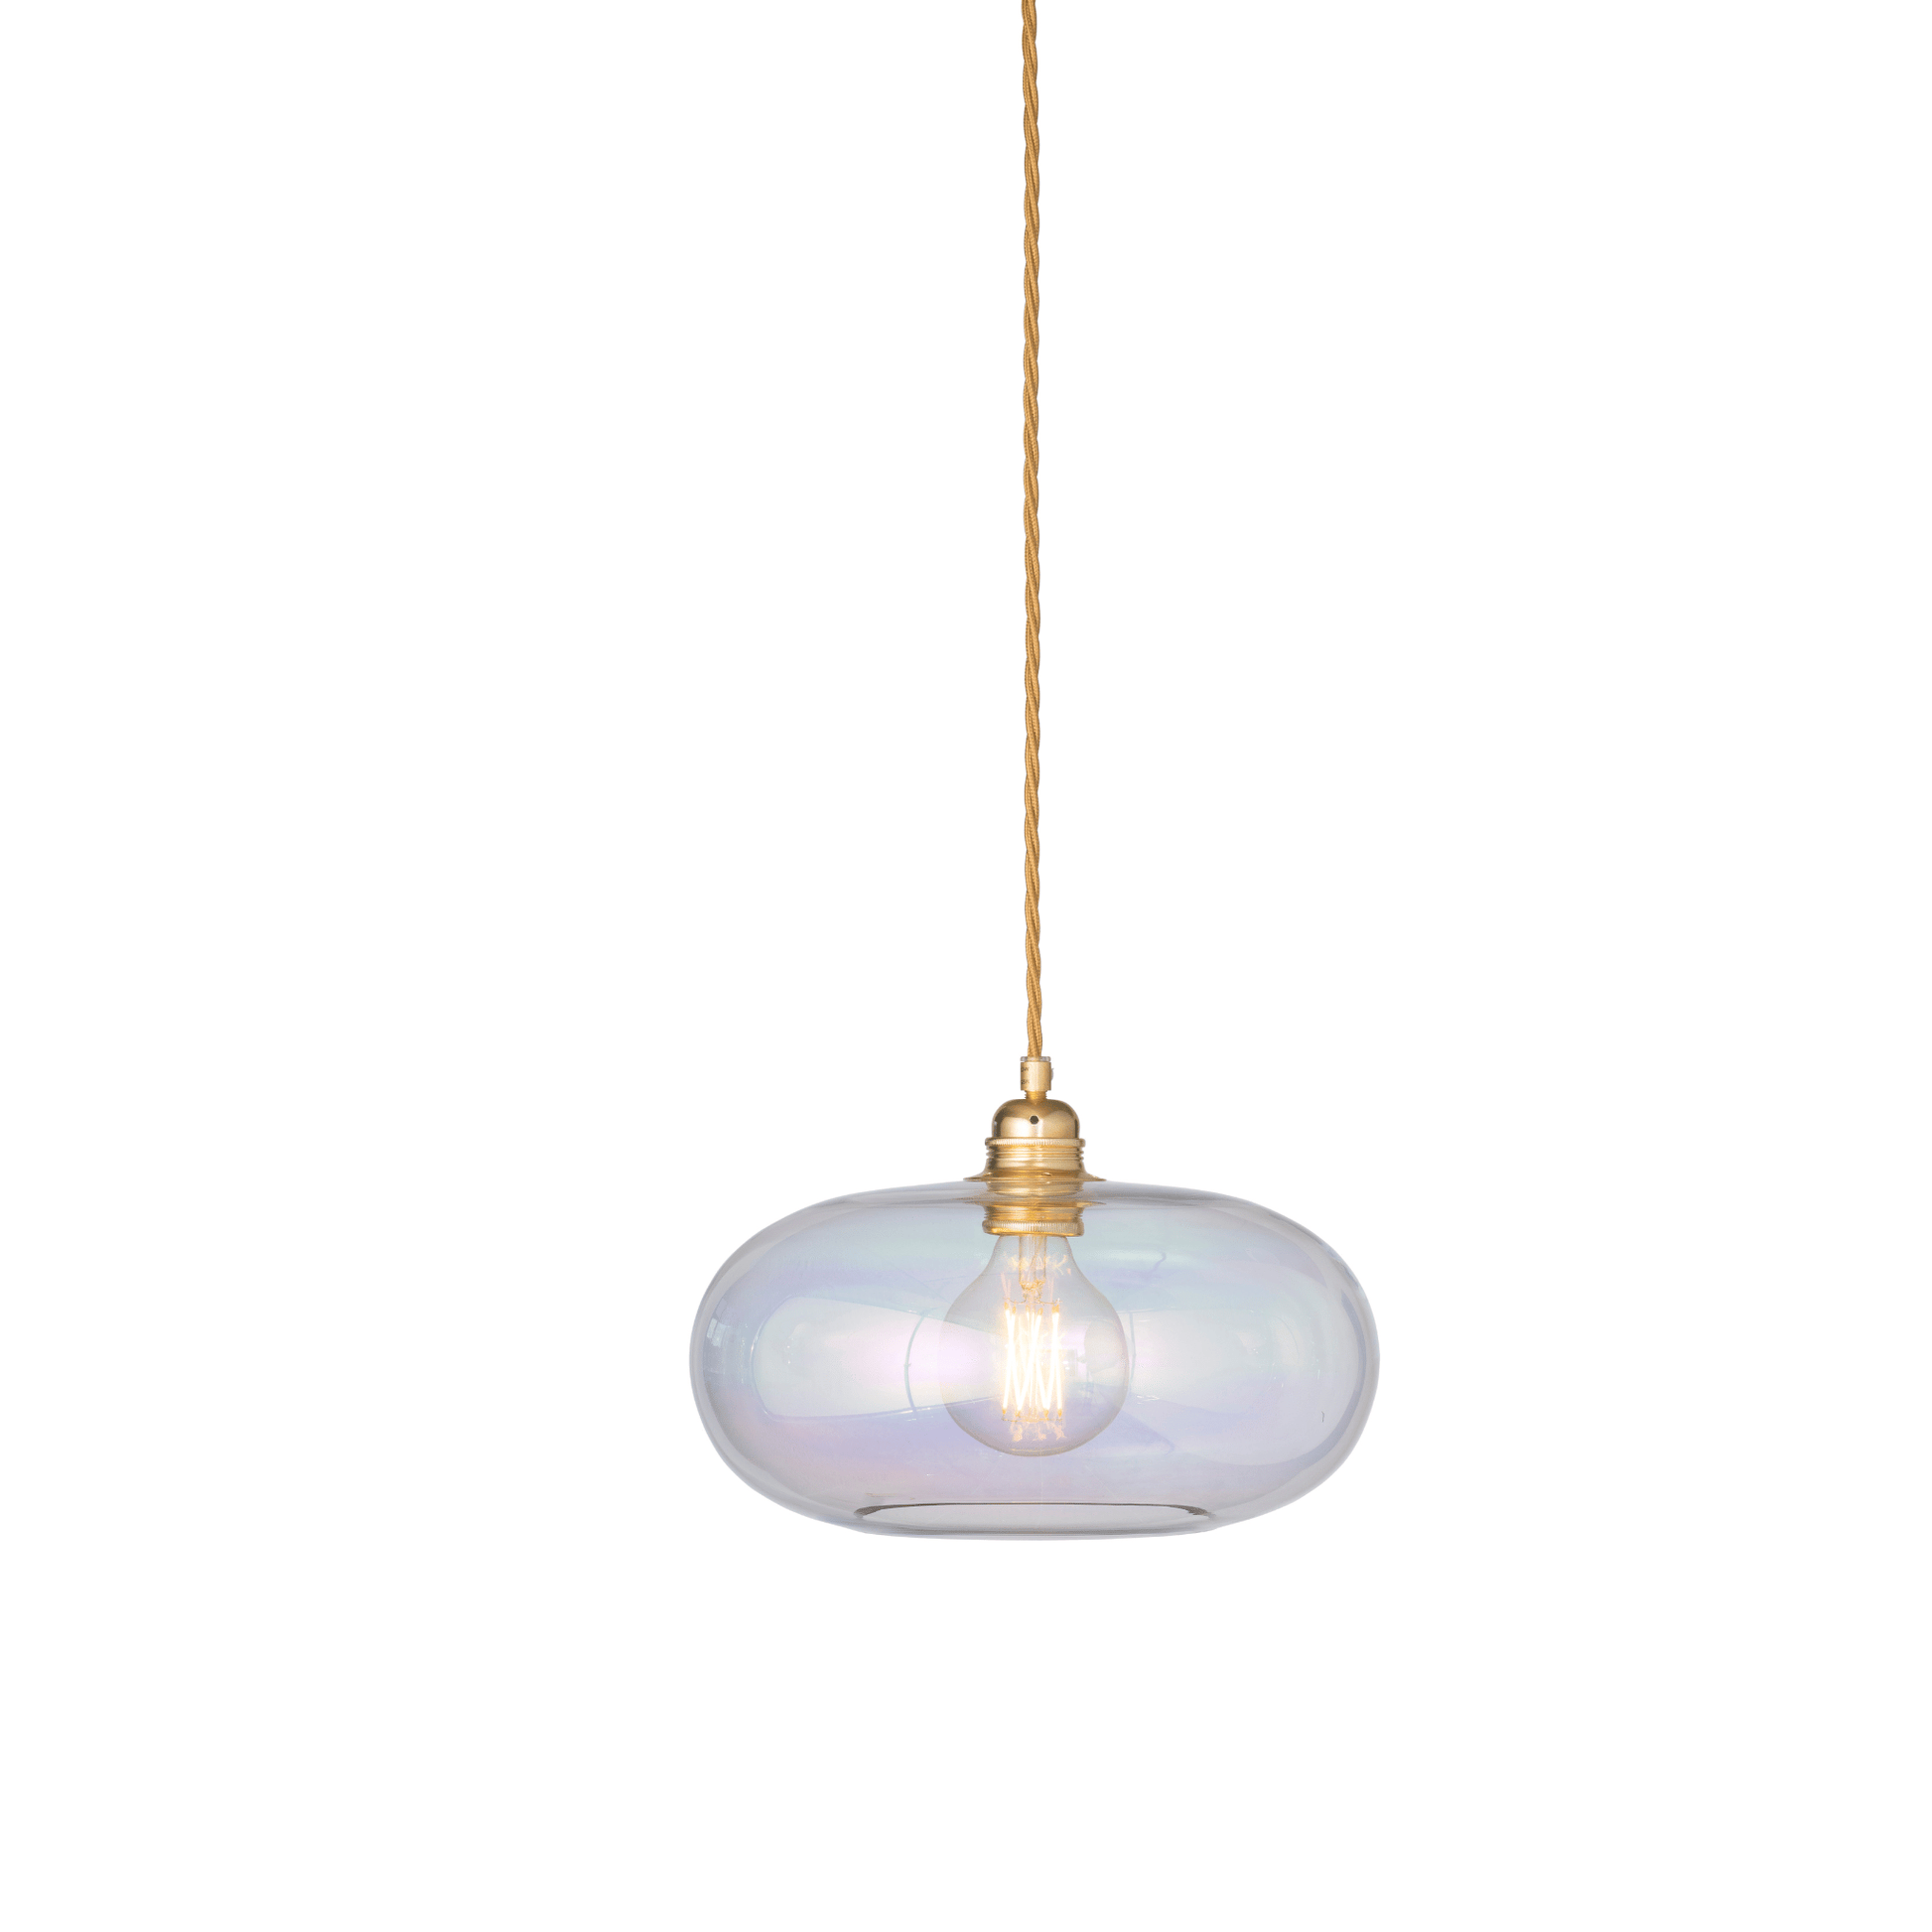 Ebb&Flow Pendant lights Chameleon with gold fitting Medium Horizon Mouth-Blown Glass Pendant Light